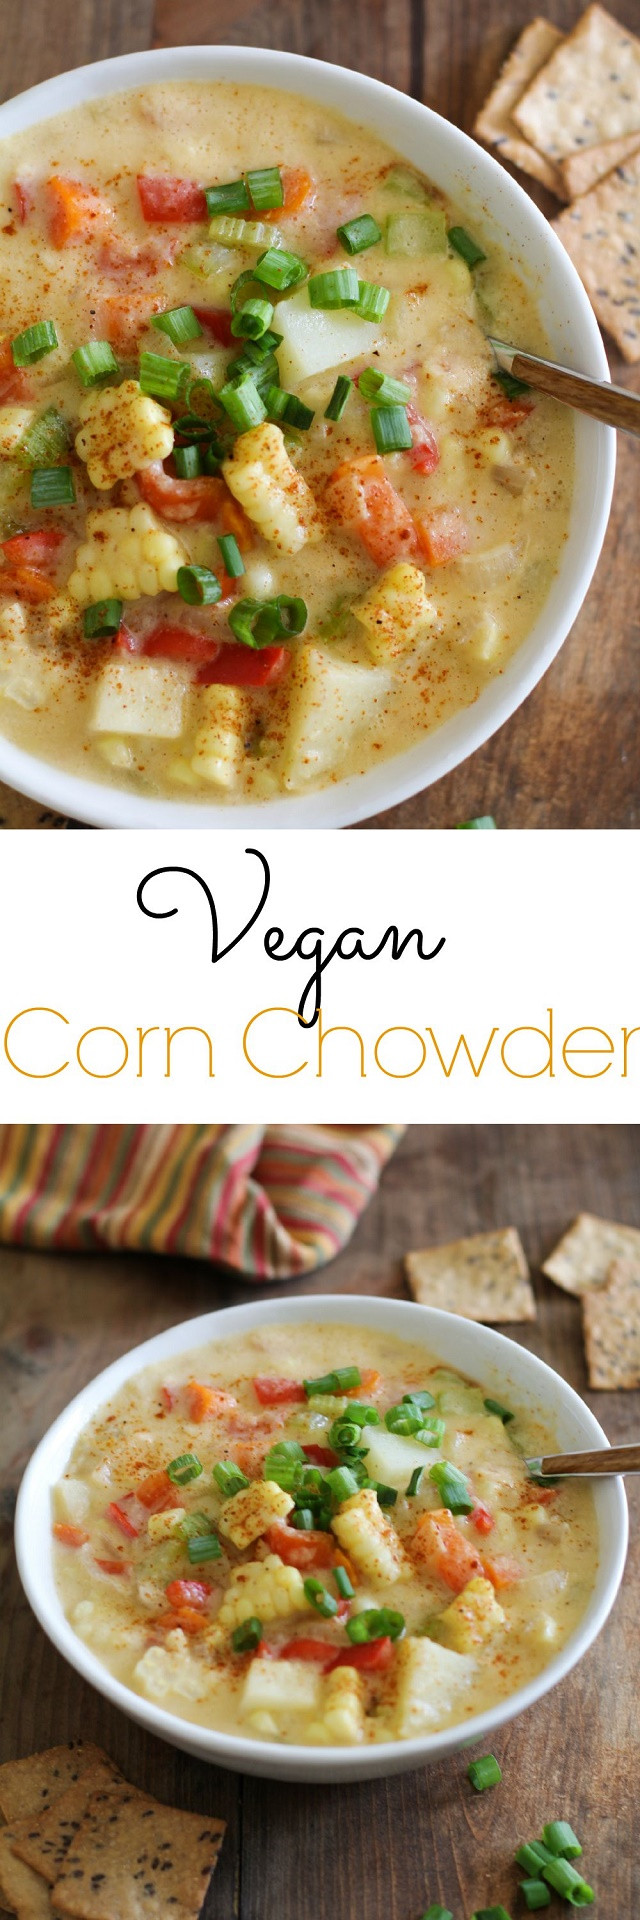 Vegetarian Corn Chowder Recipes
 Vegan Corn Chowder The Roasted Root